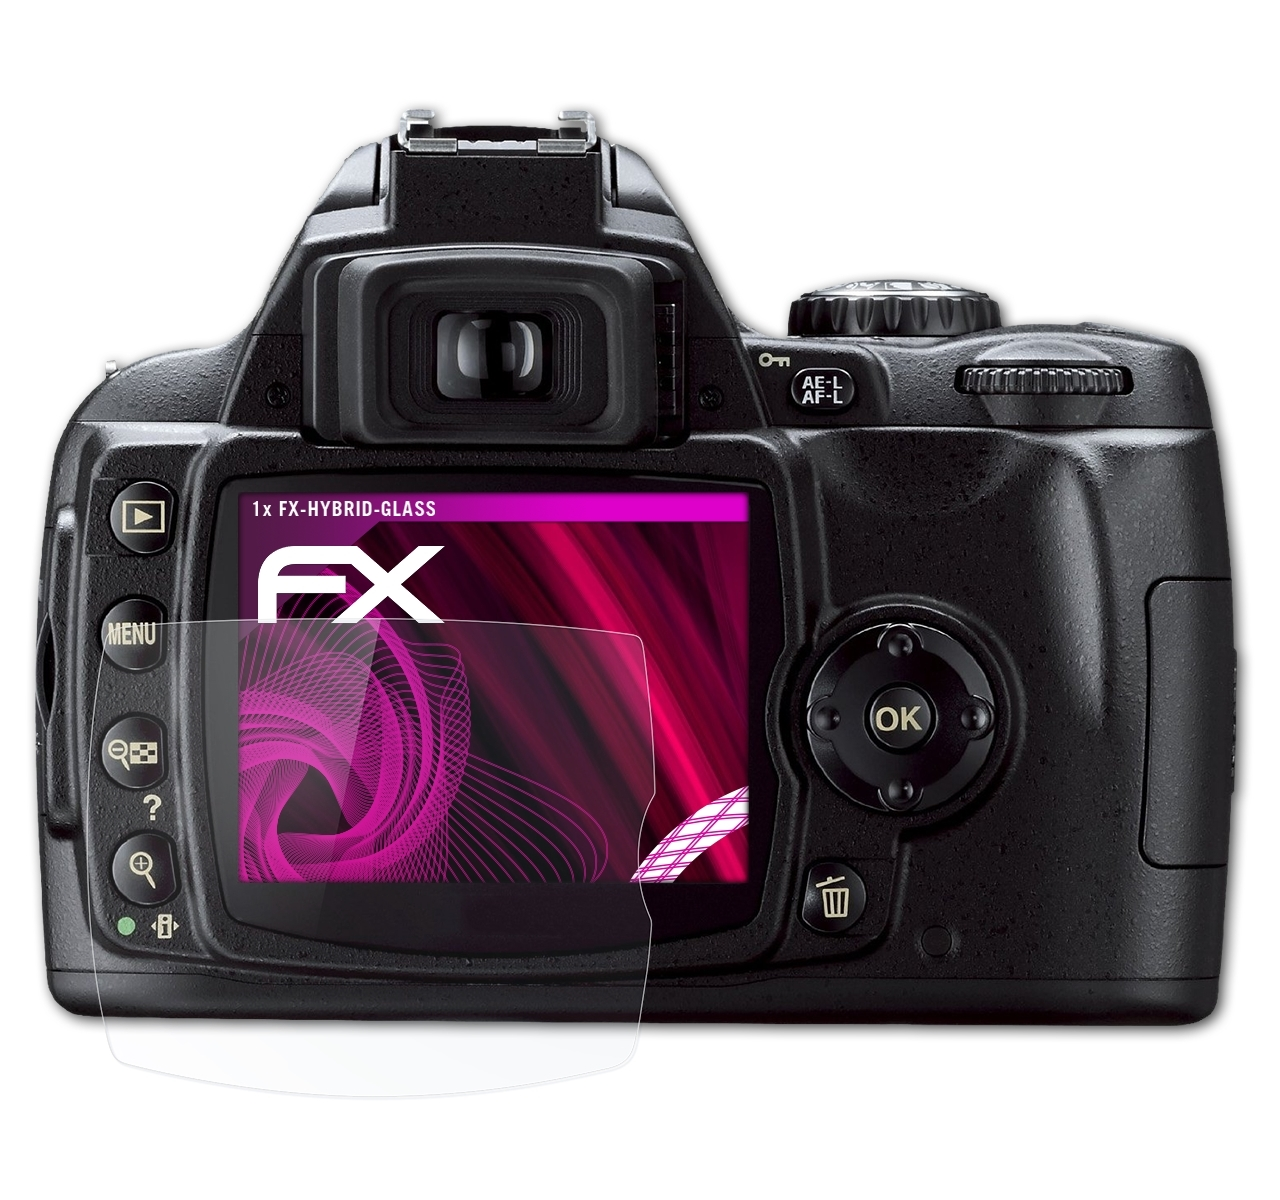 D40X) ATFOLIX Schutzglas(für FX-Hybrid-Glass Nikon